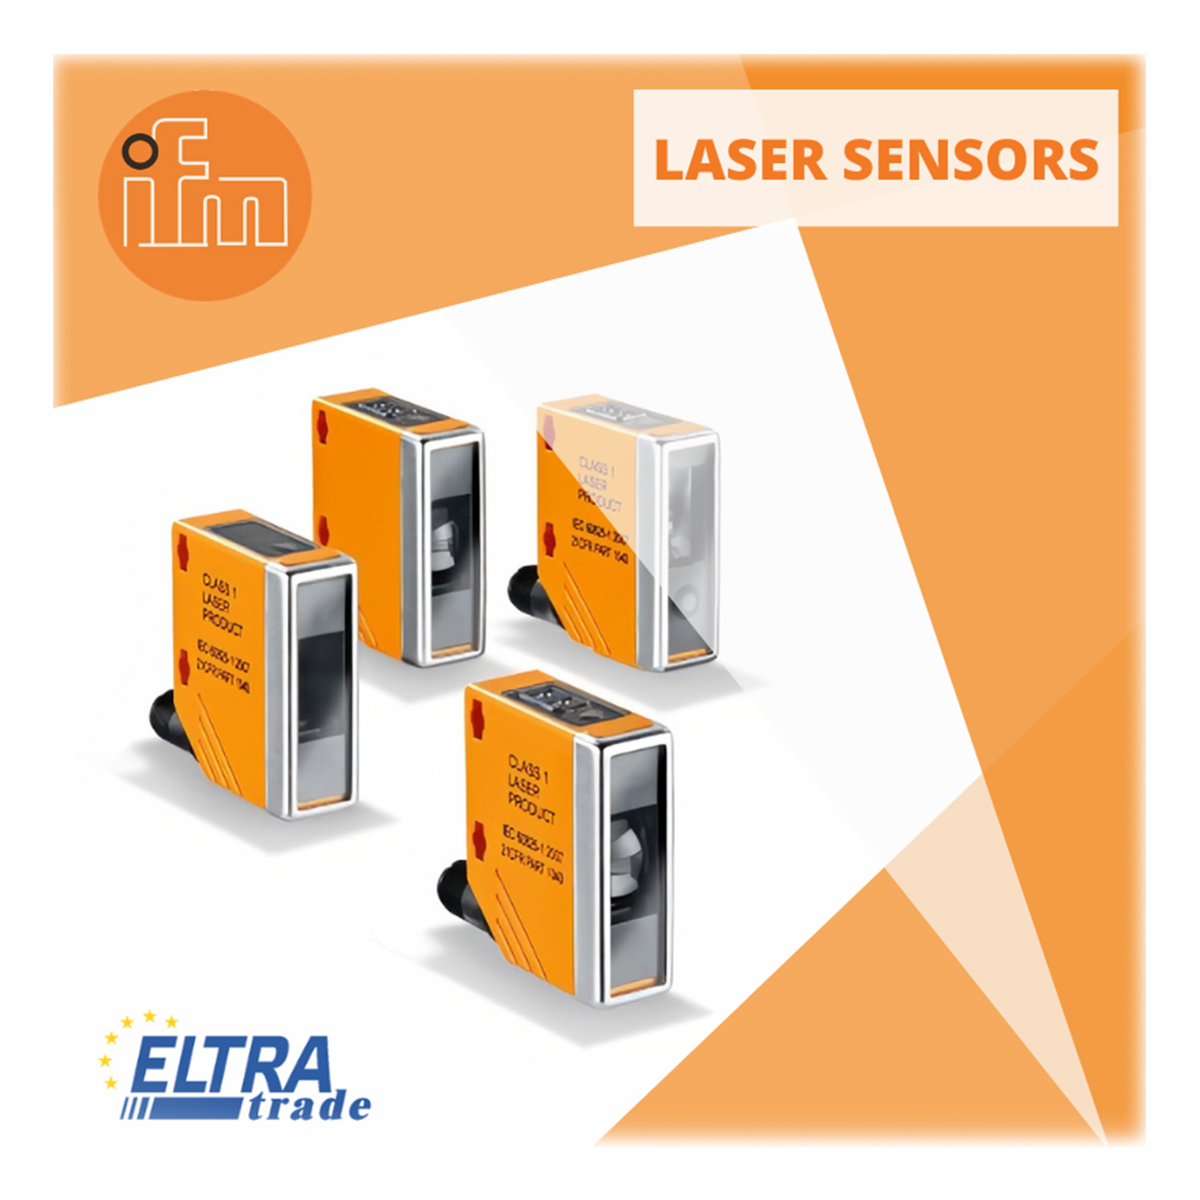 ifm laser sensors photo